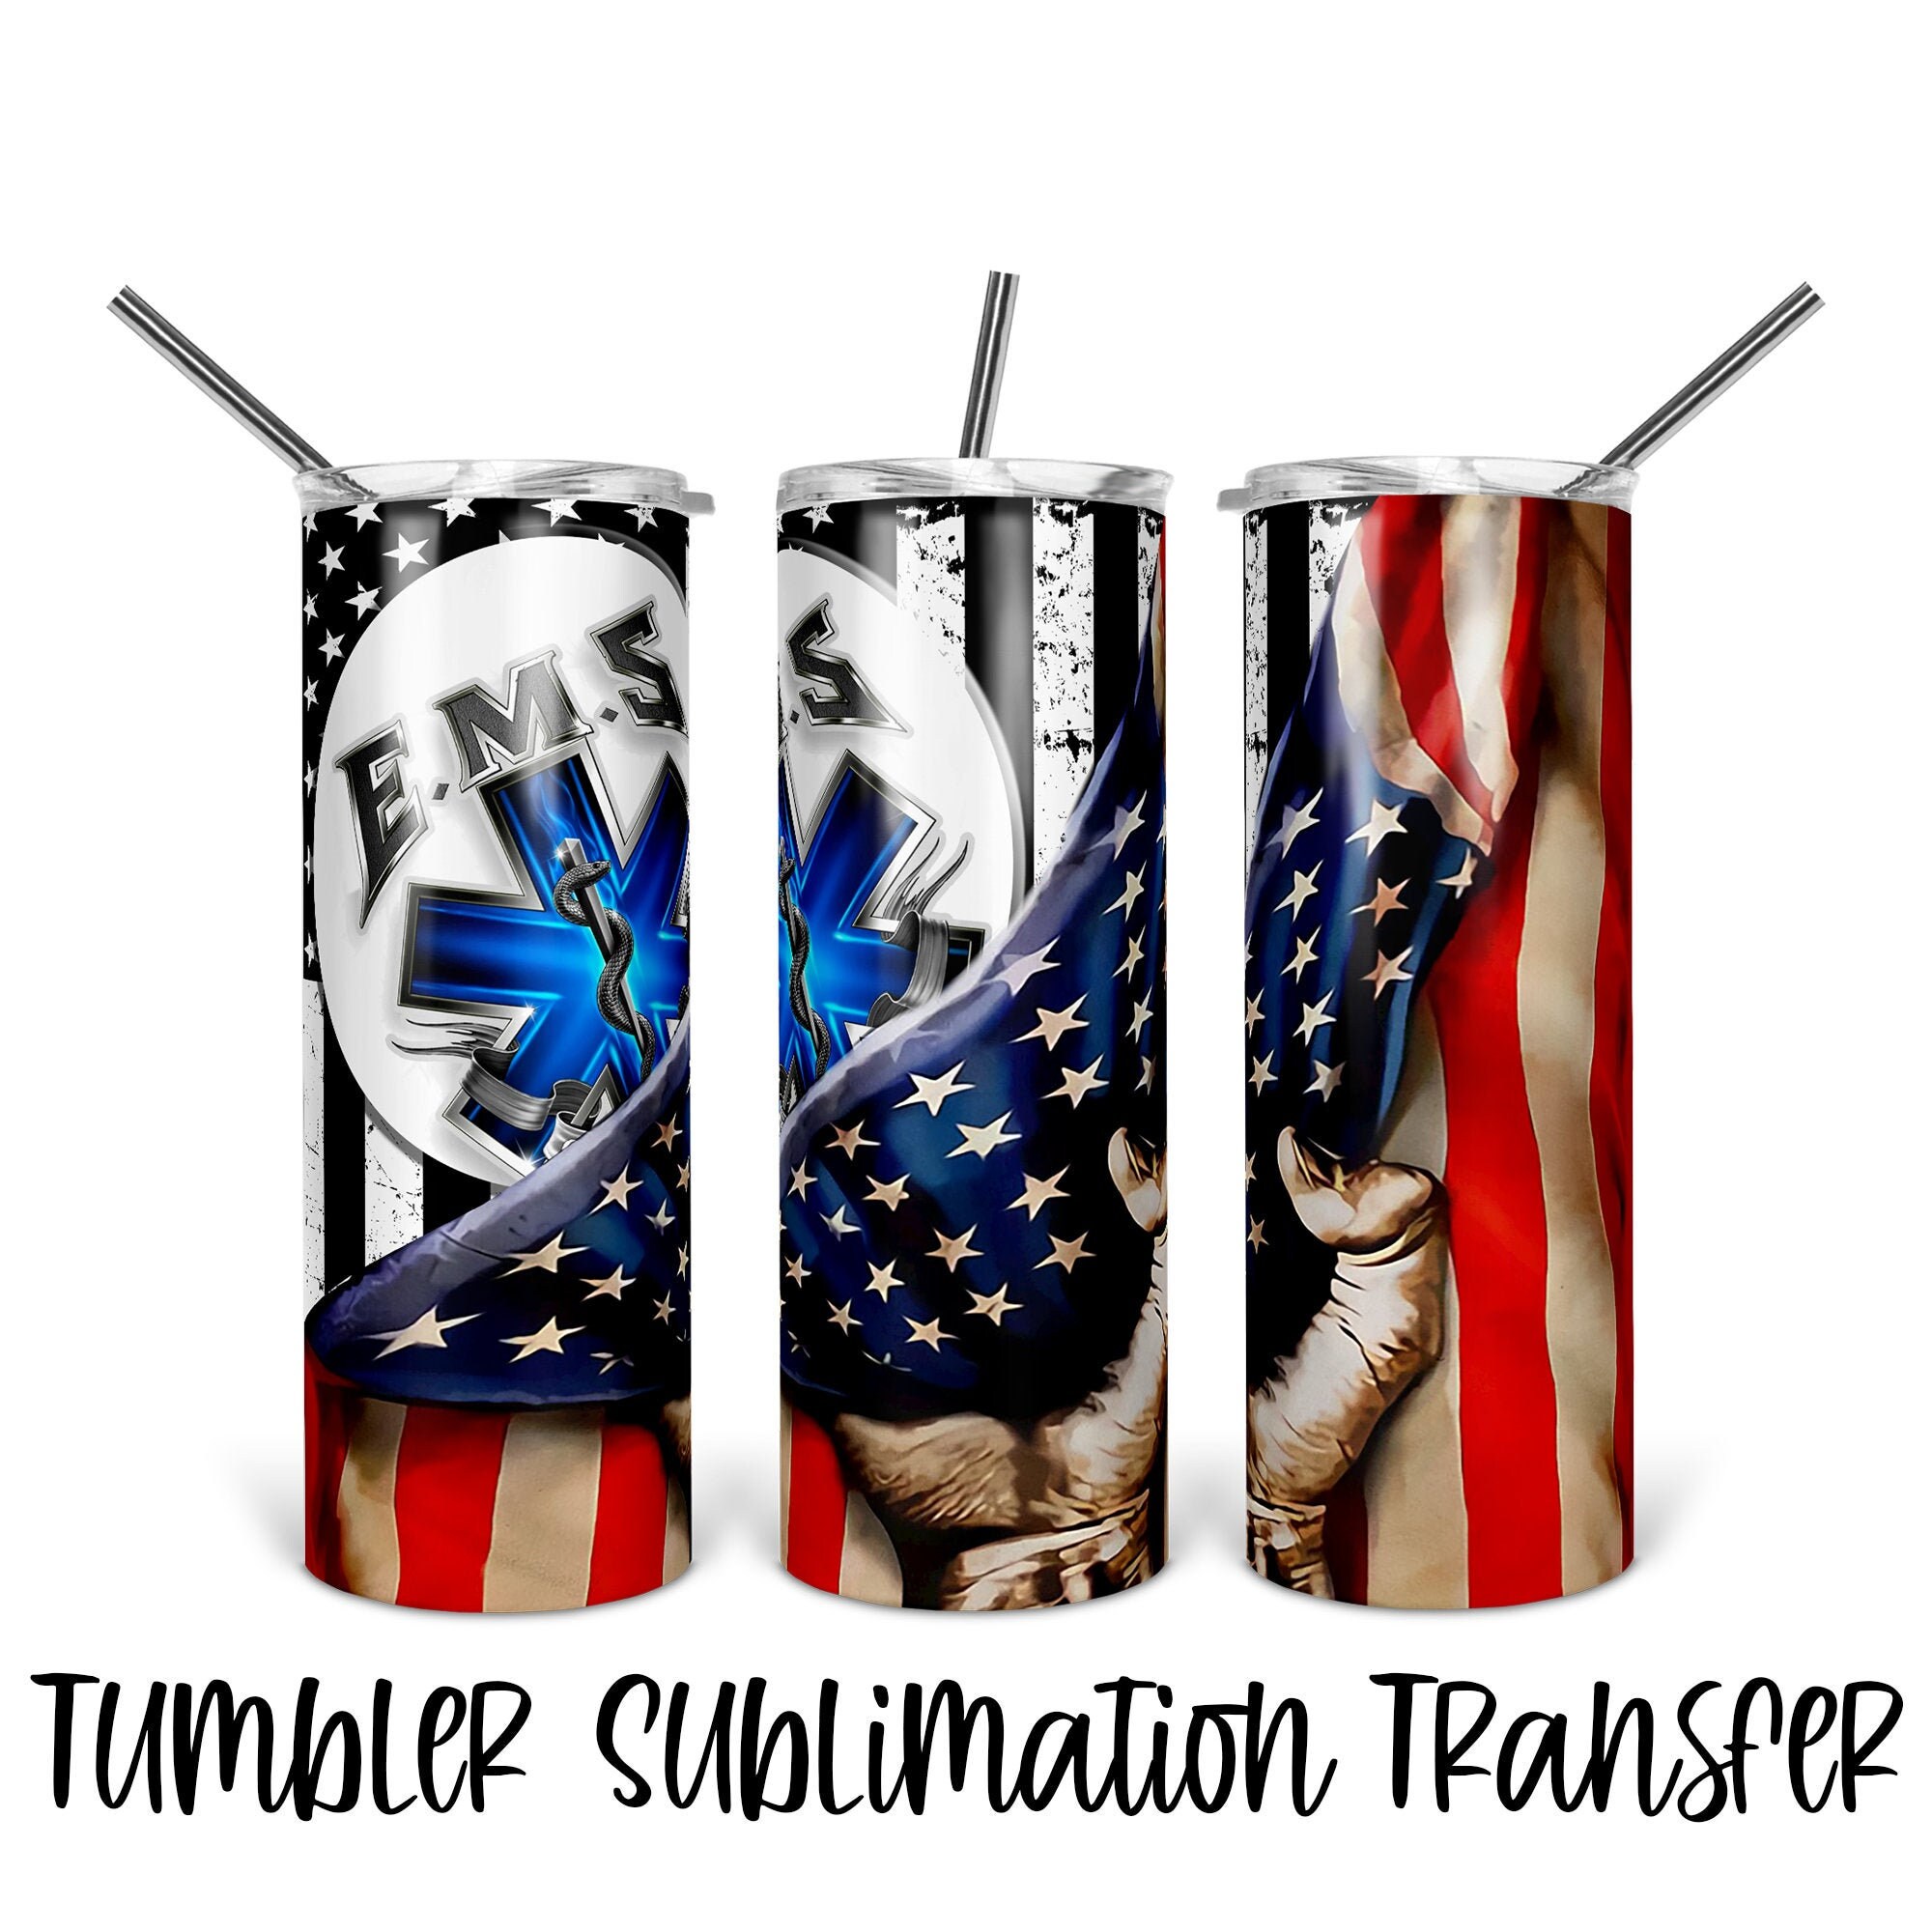 Sublimation Transfer Subliation Design Sublimation Transfer Ready To Press Sublimation Designs Ready to Press Sublimation Transfers